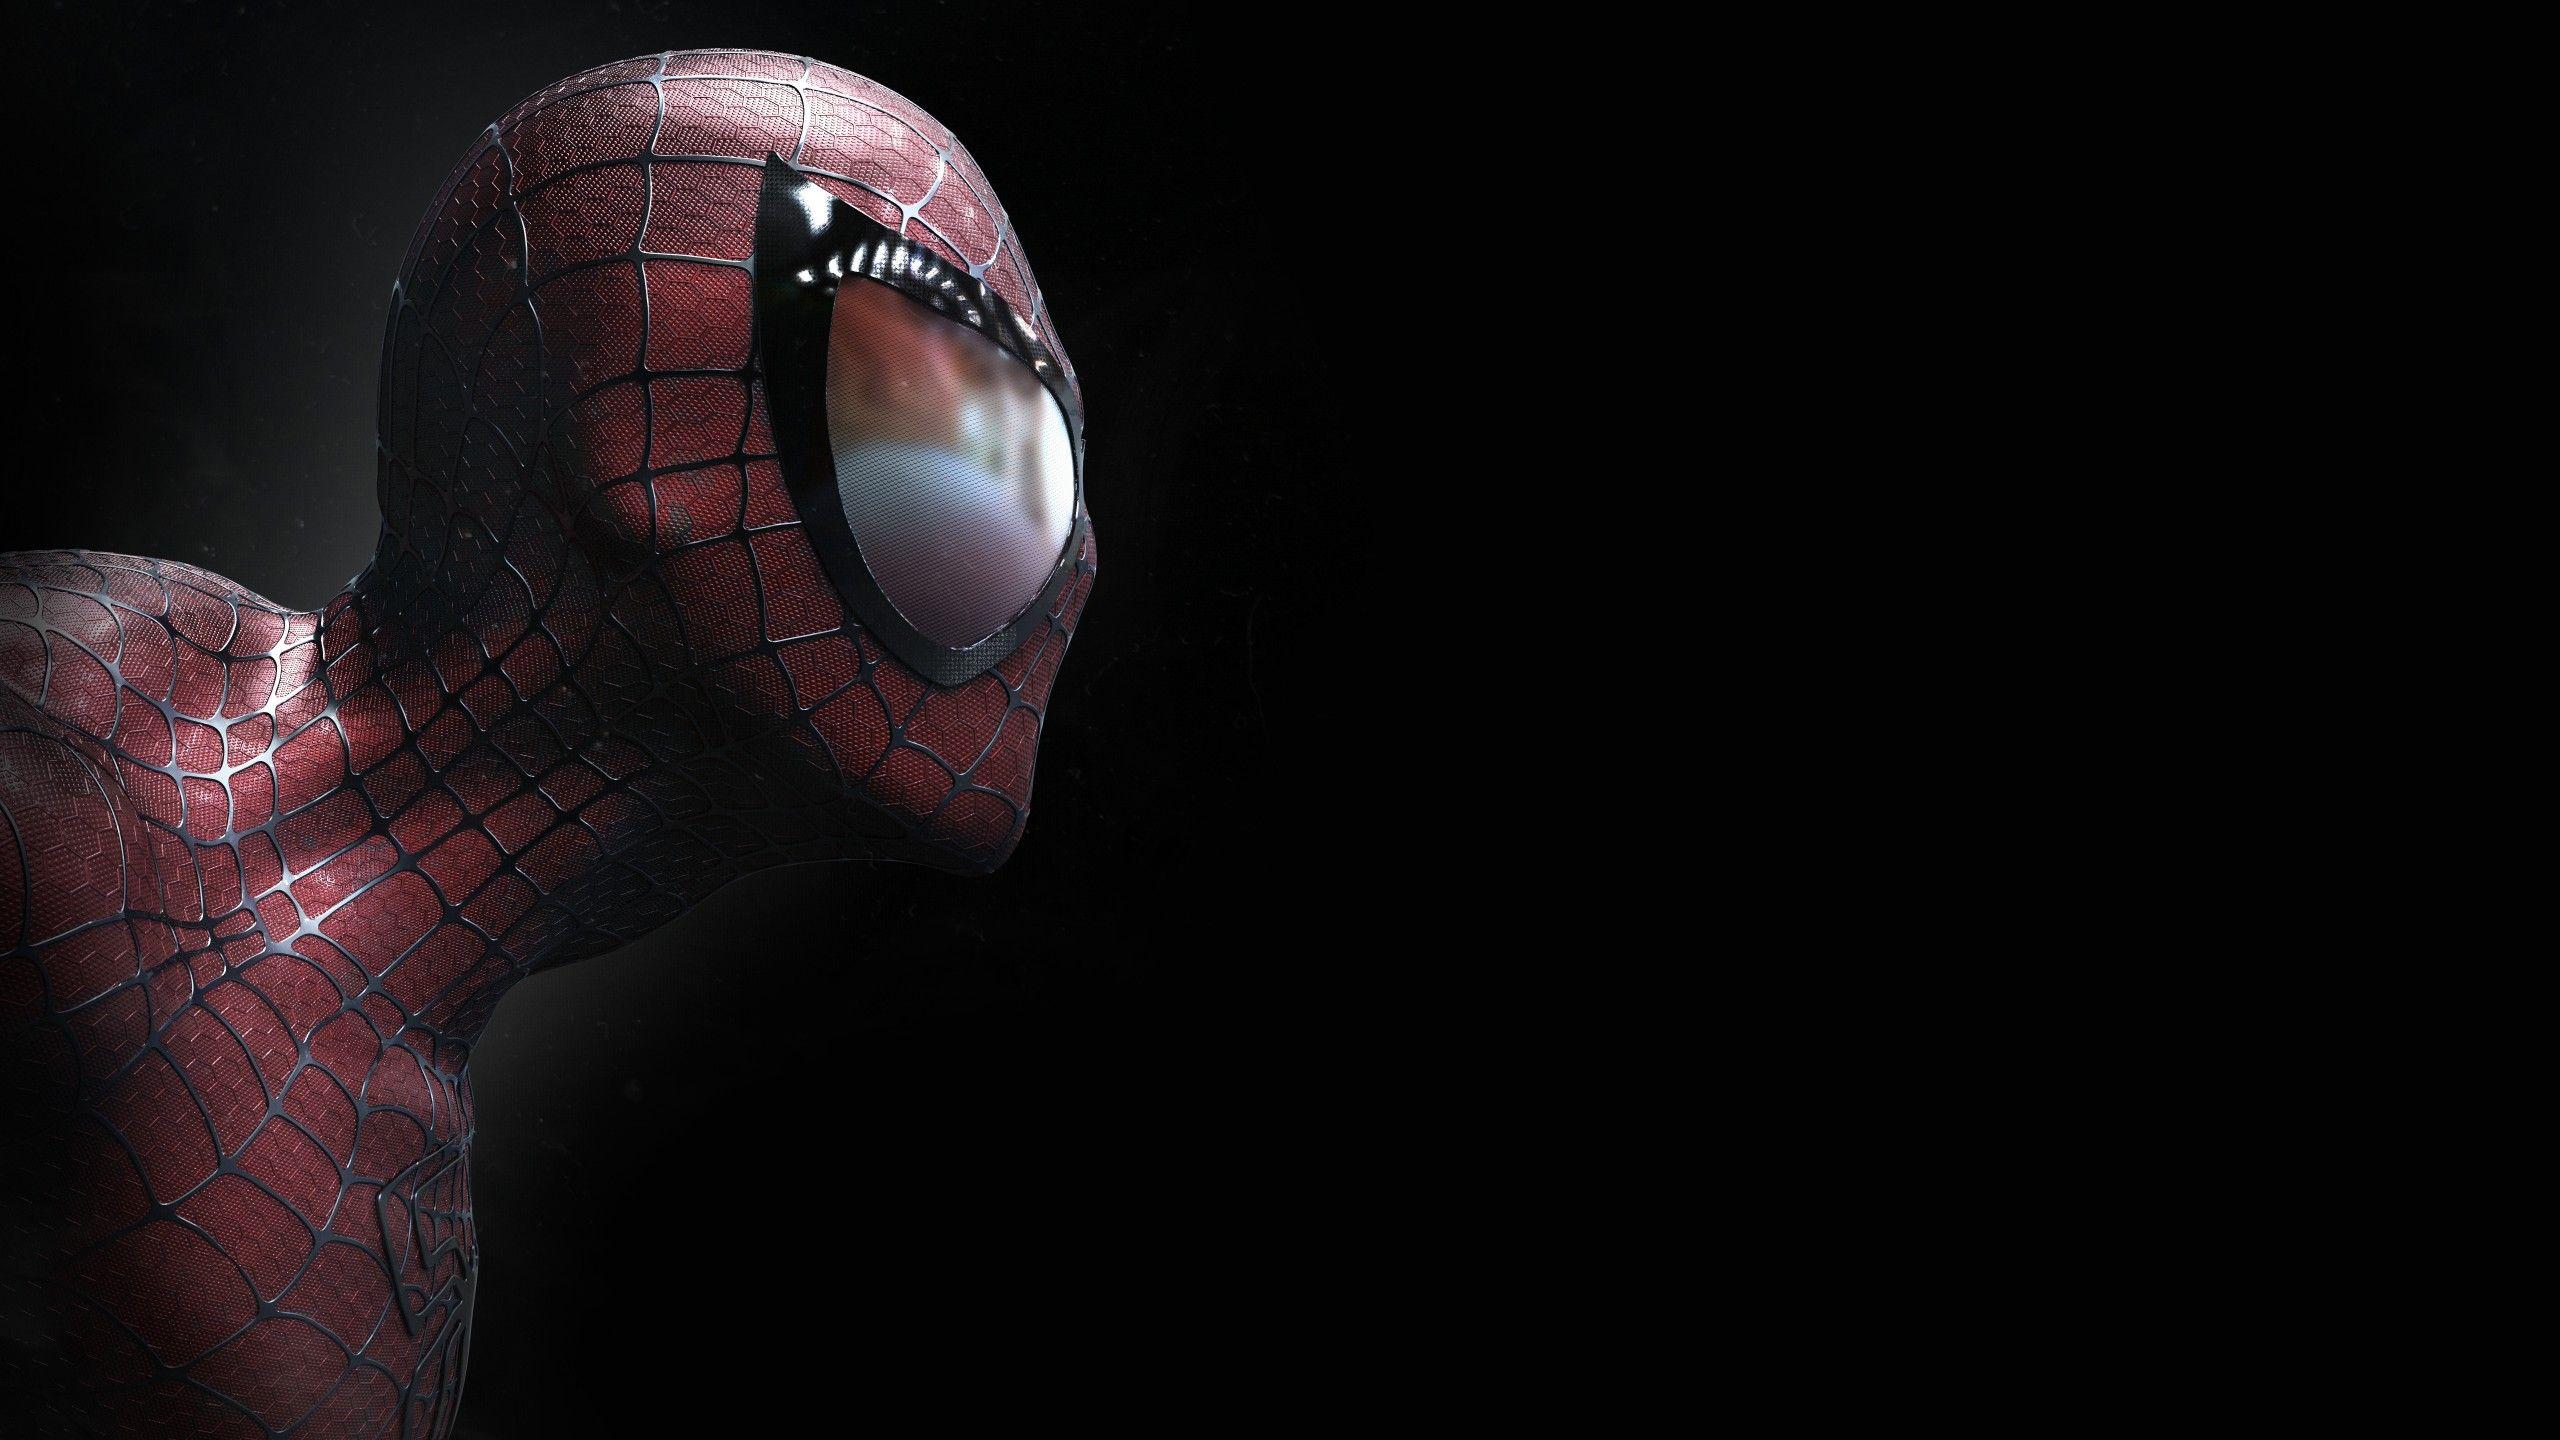 Dark Spiderman Wallpapers - Top Free Dark Spiderman Backgrounds ...